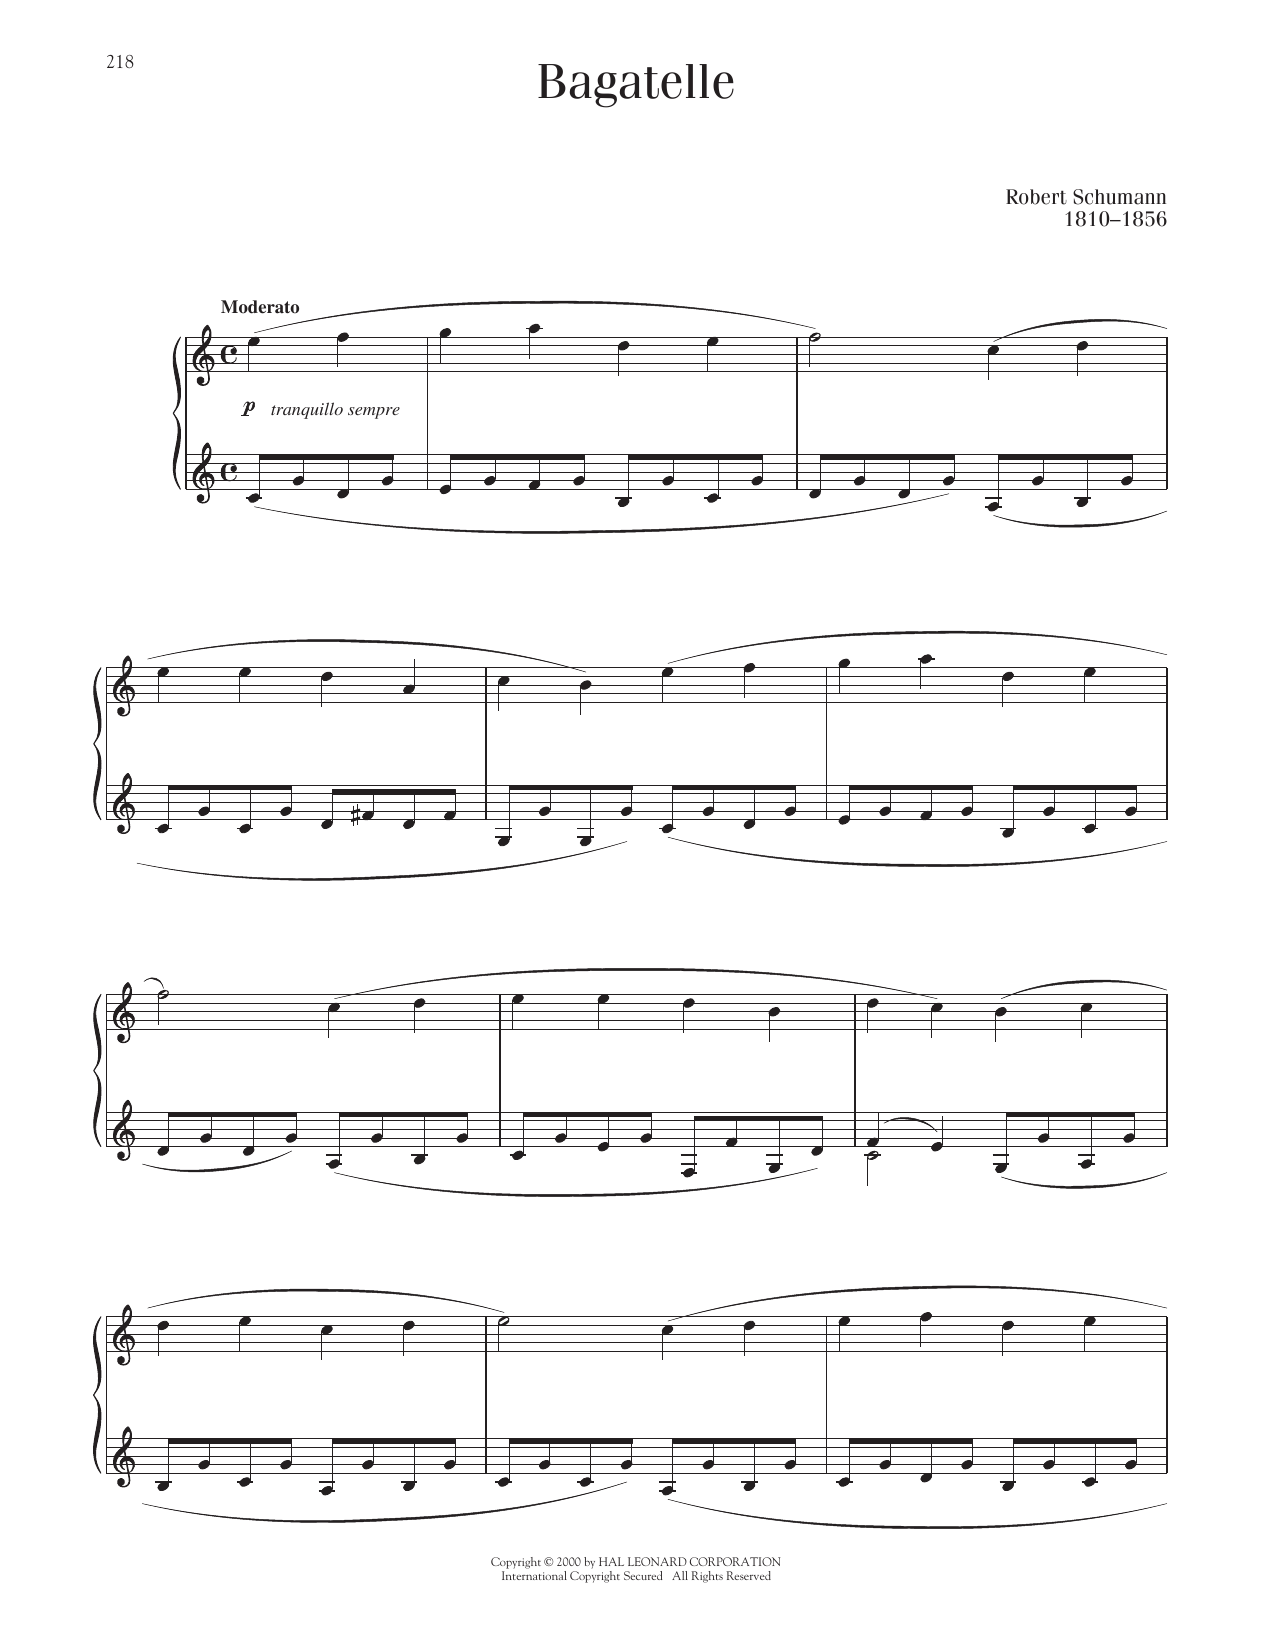 Robert Schumann Bagatelle sheet music notes printable PDF score